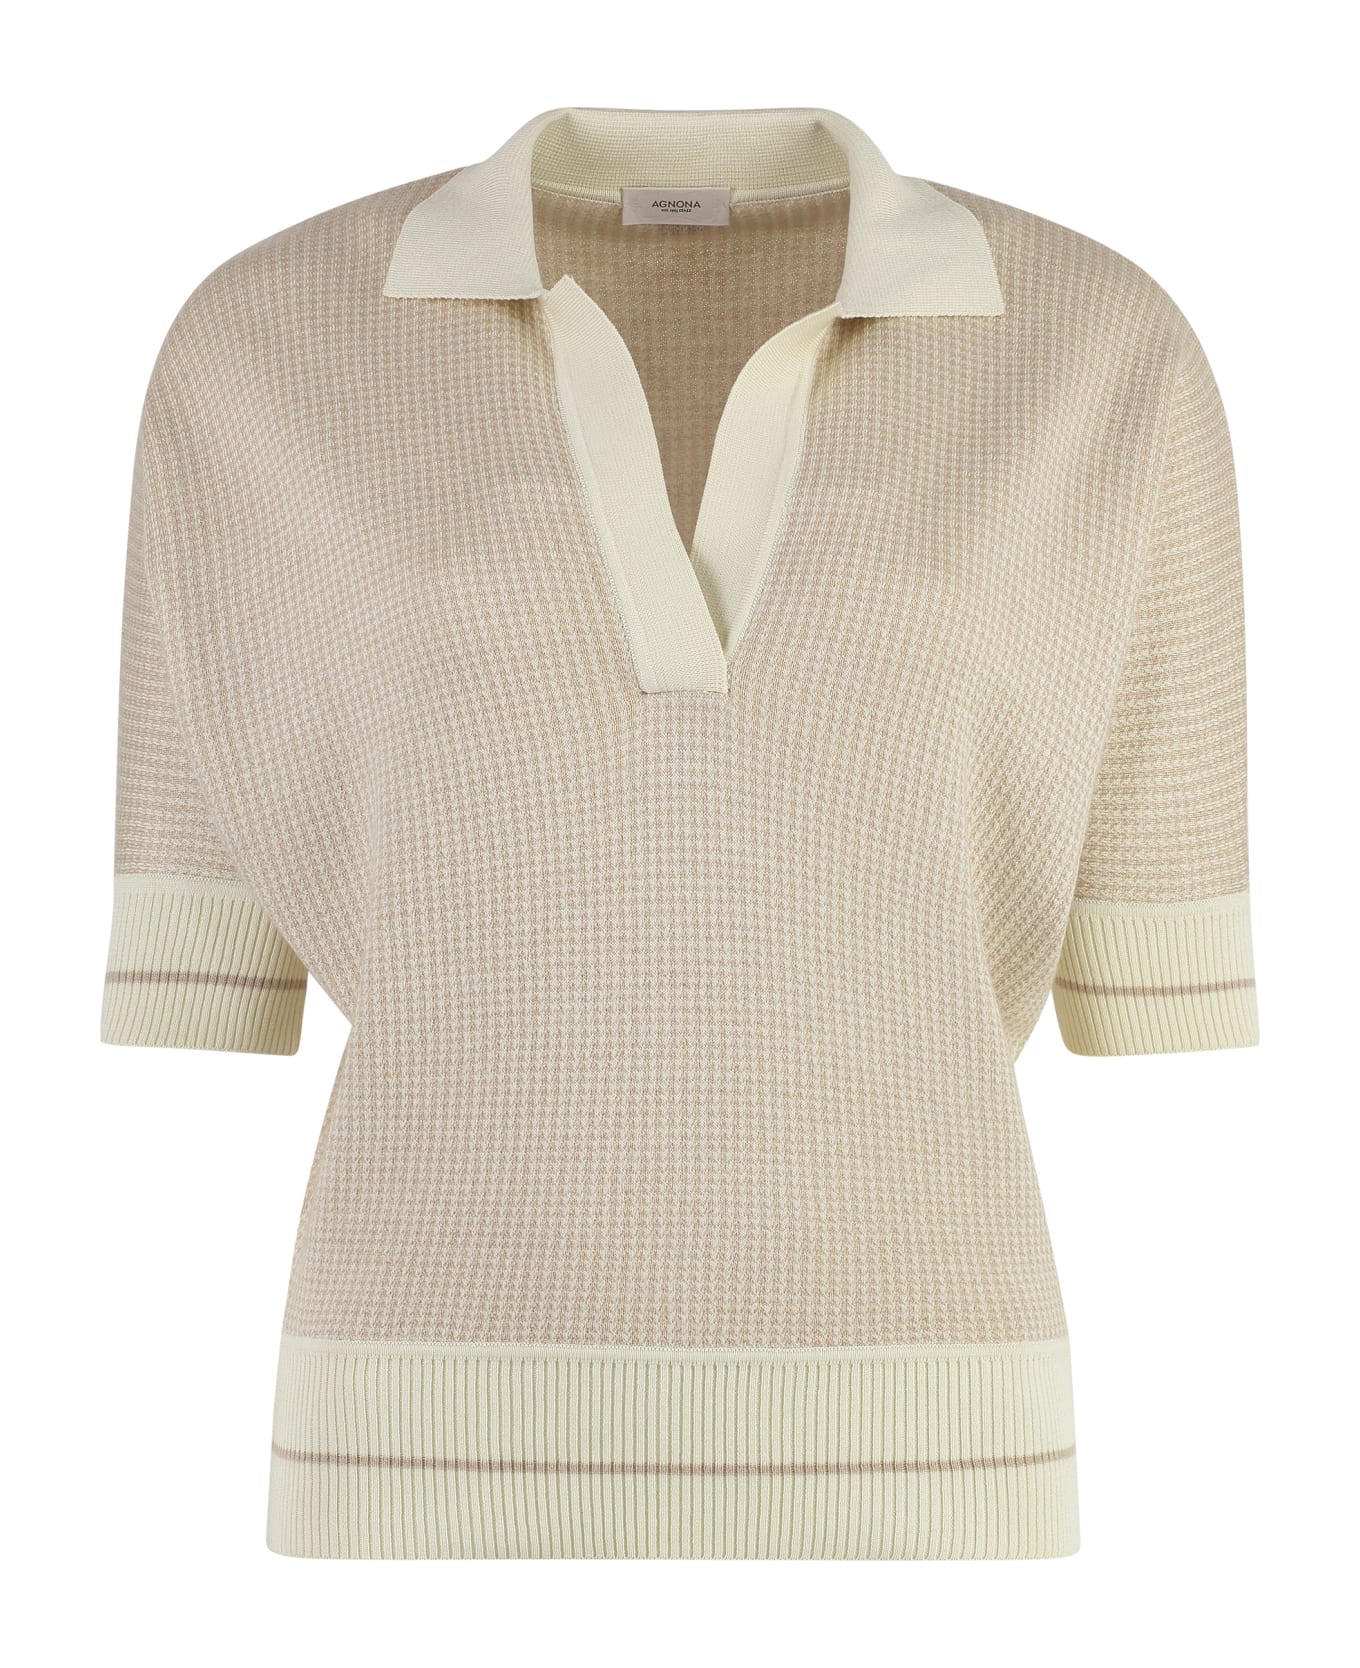 Agnona Contrast Trim Knitted Polo Shirt - Beige